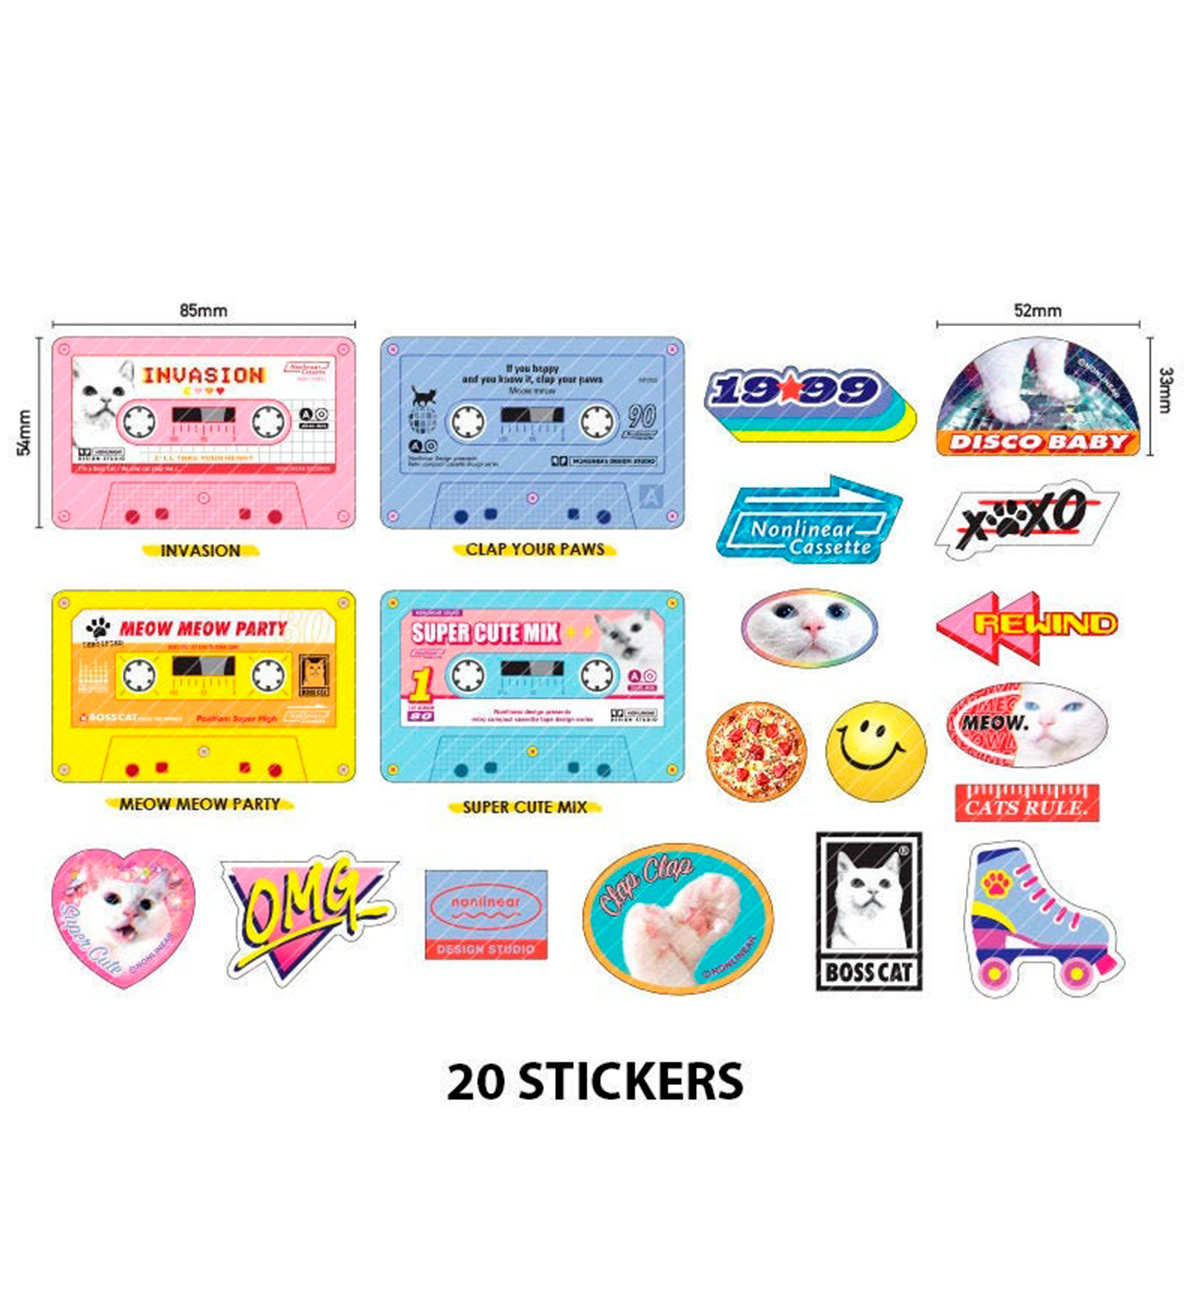 Cassette Sticker Pack [Meow Mix]